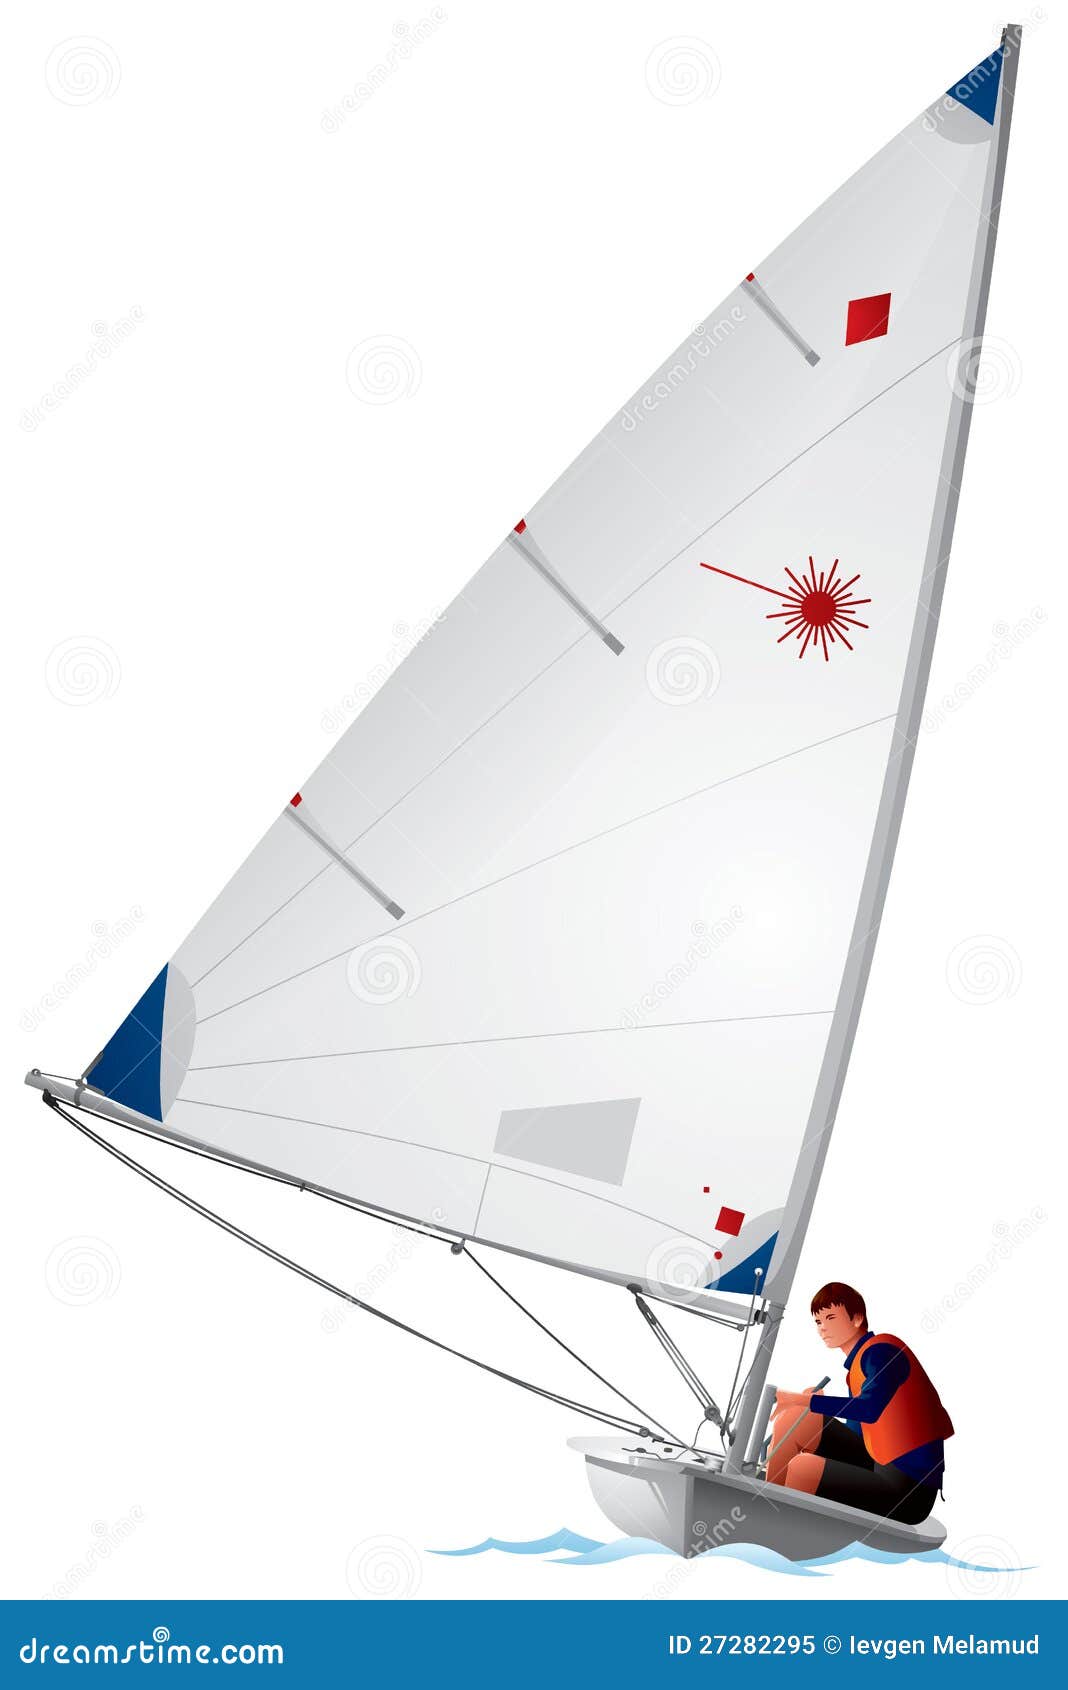  Class sailboat vector illustration, sailing sport dinghy and sailor